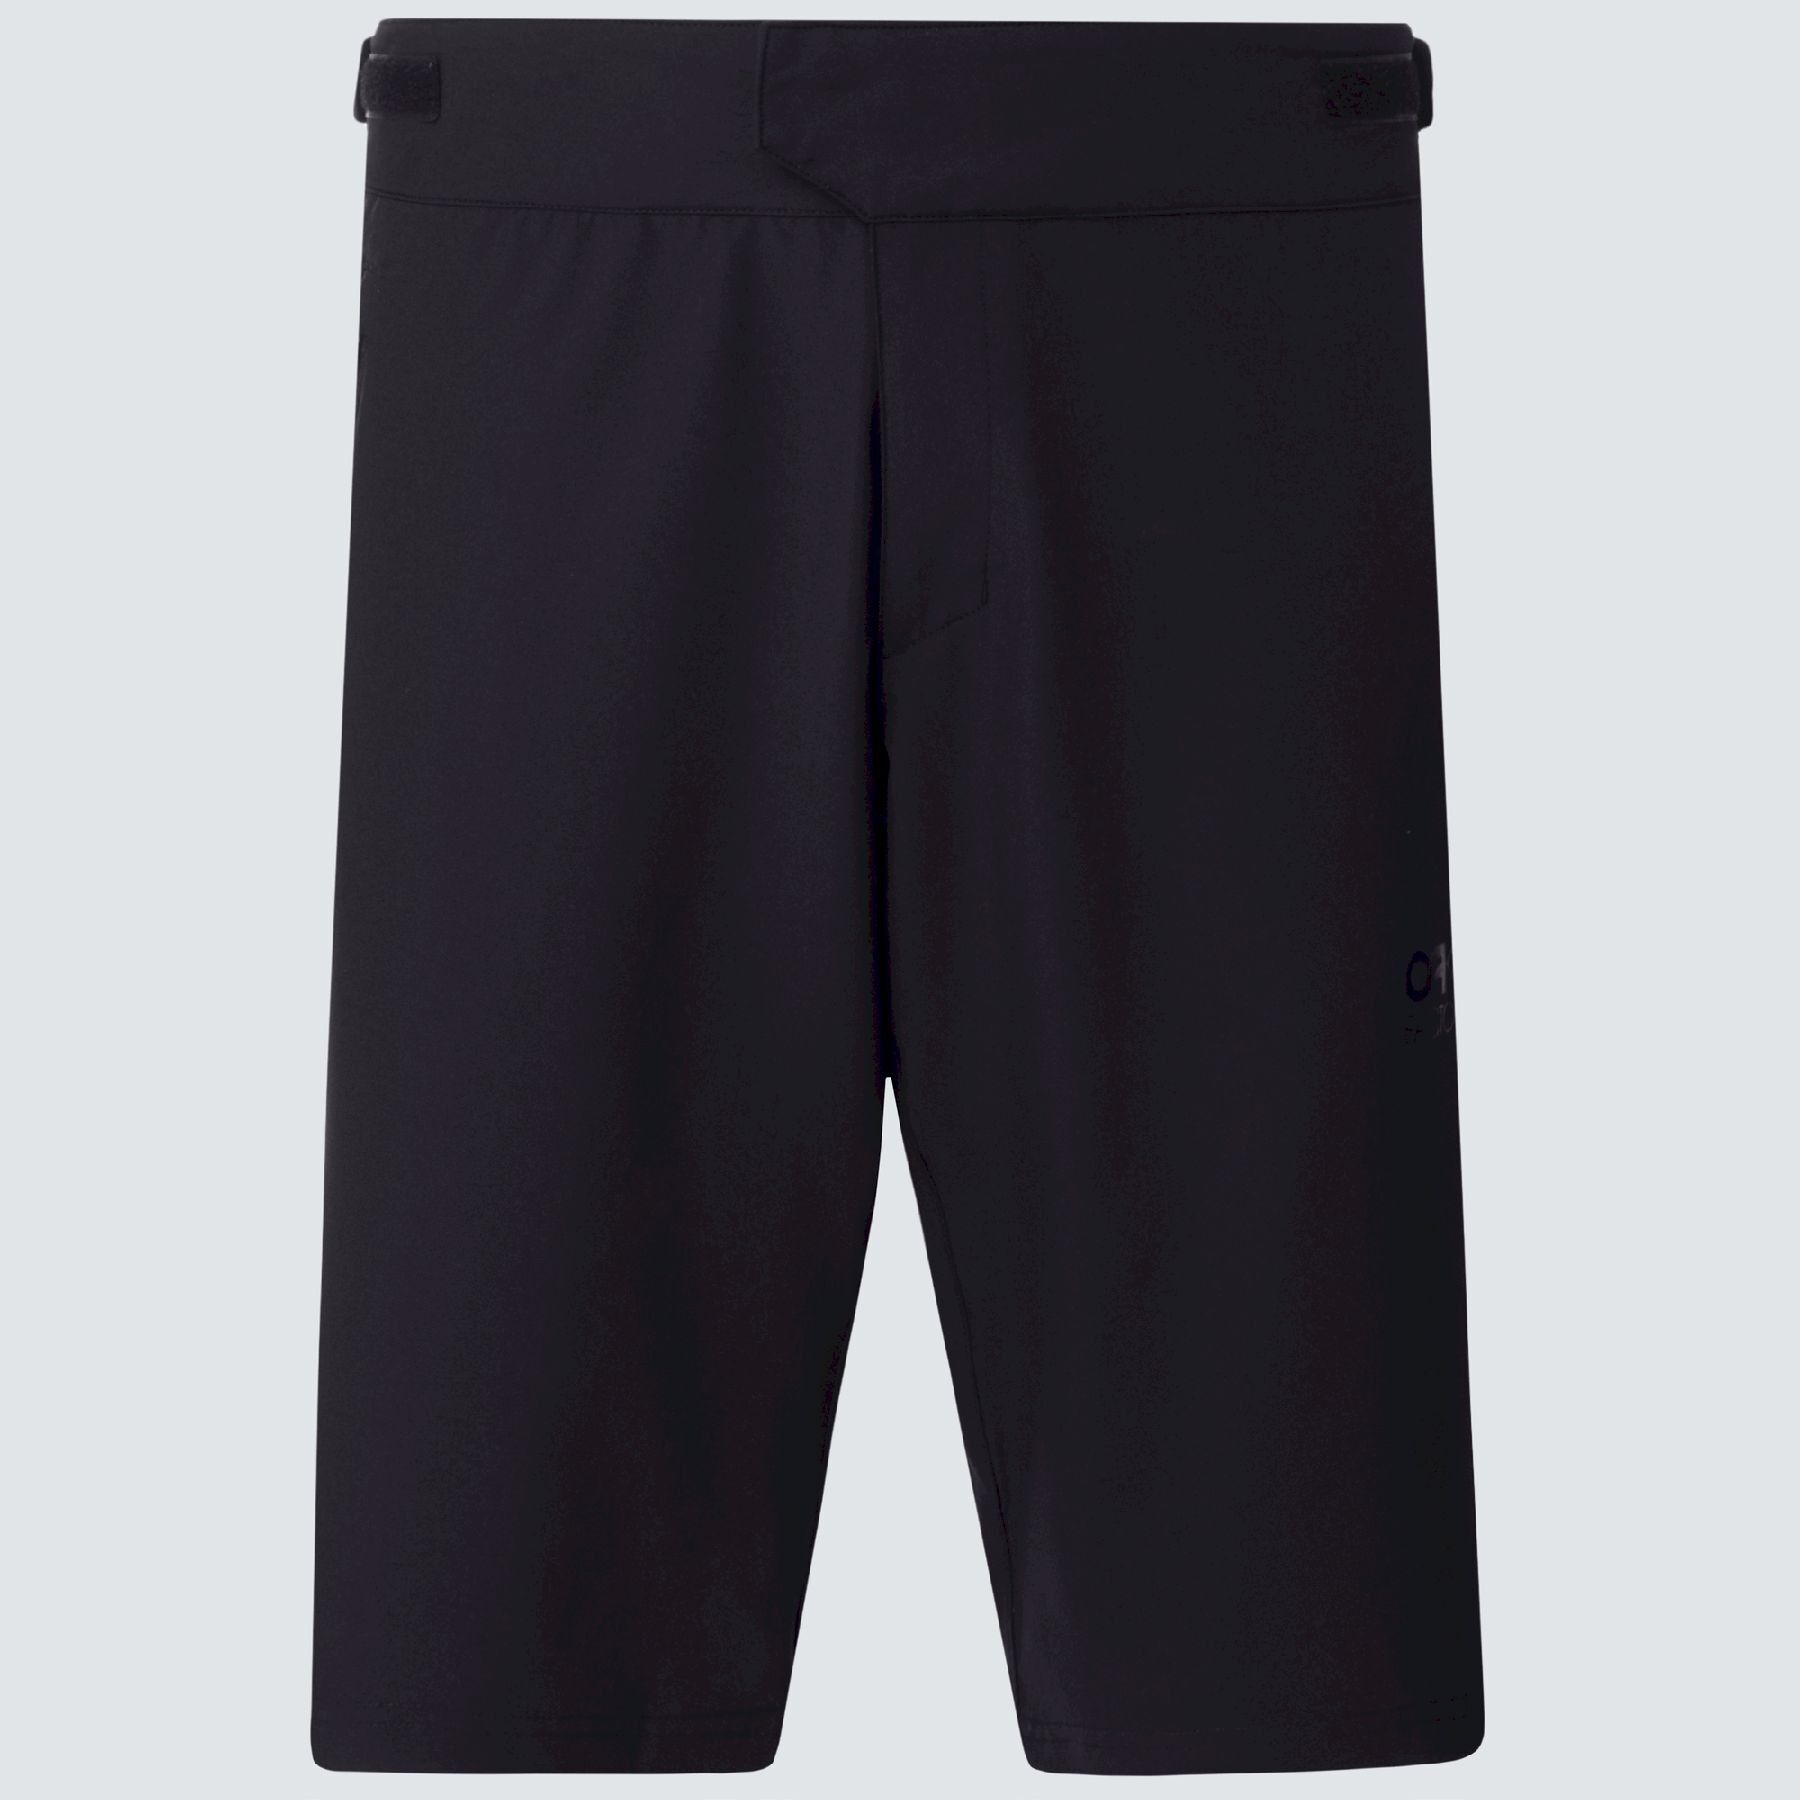 Oakley Arroyo Trail Shorts - Pantalones cortos MTB - Hombre